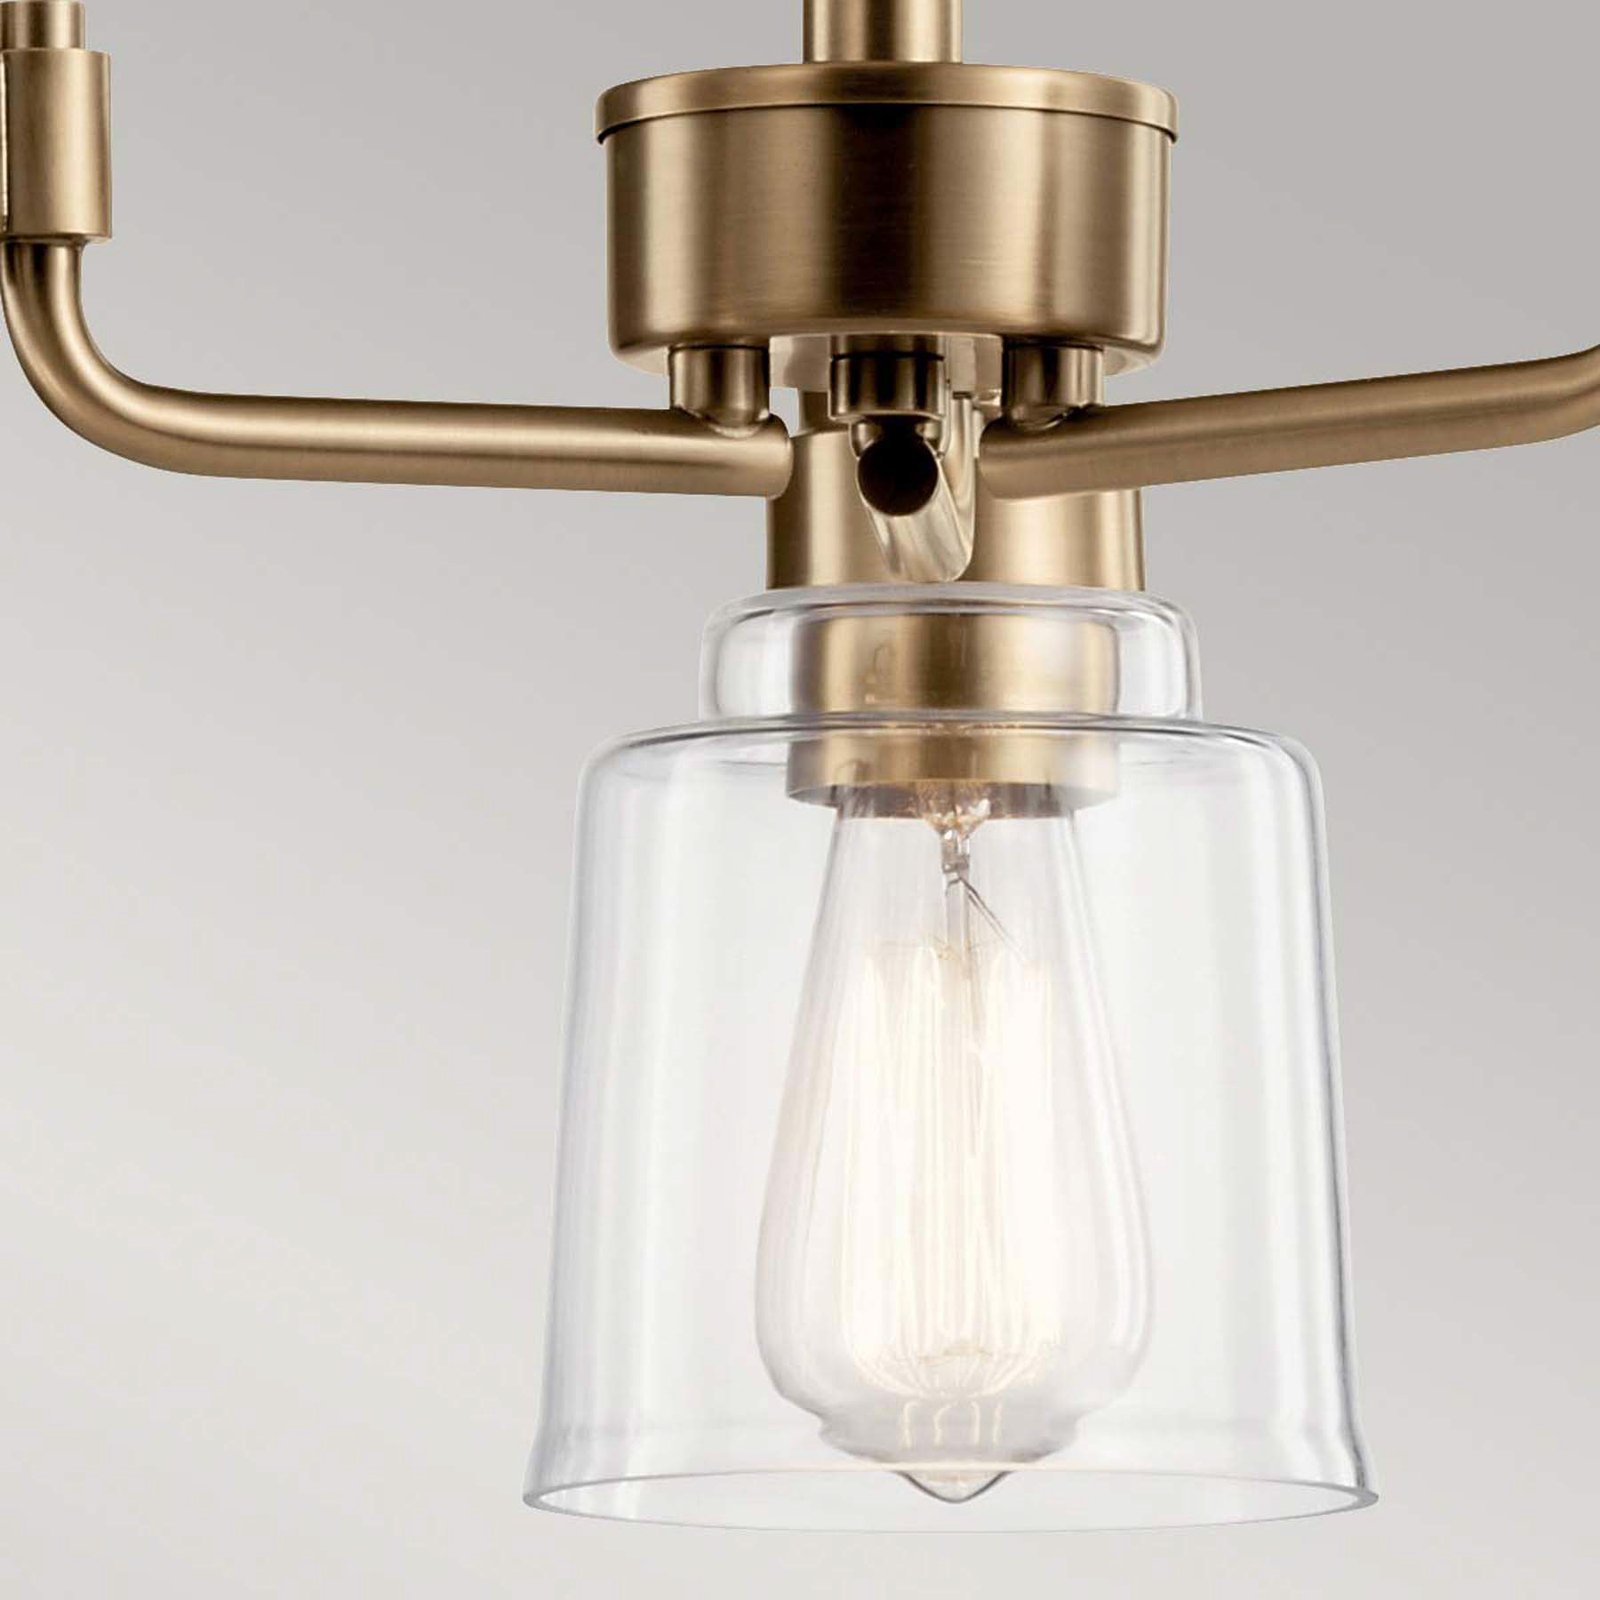 Aivian pendant light, 3-bulb, weathered brass